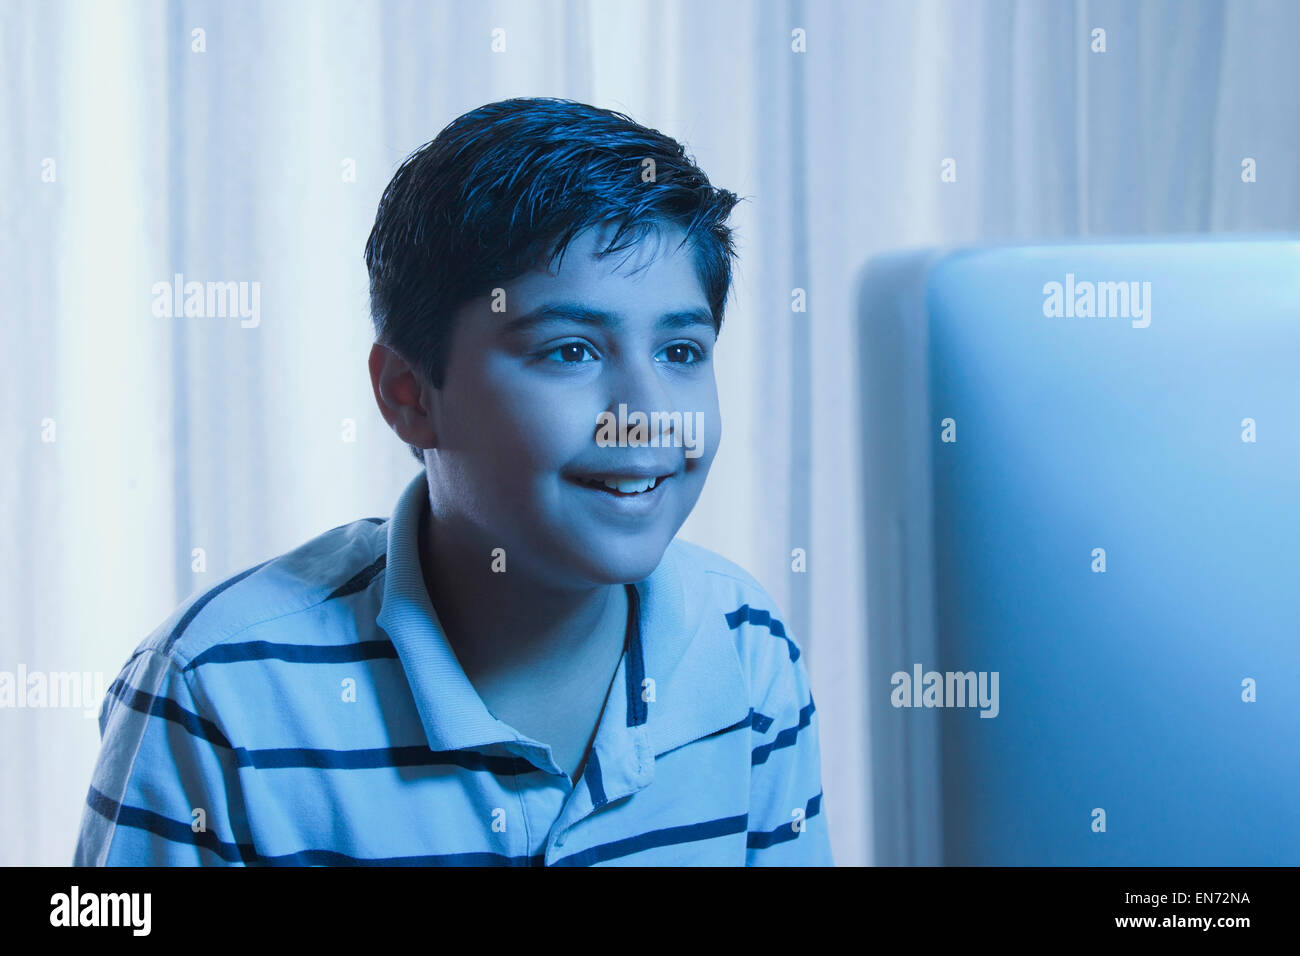 Young boy looking at a computer monitor Stock Photo